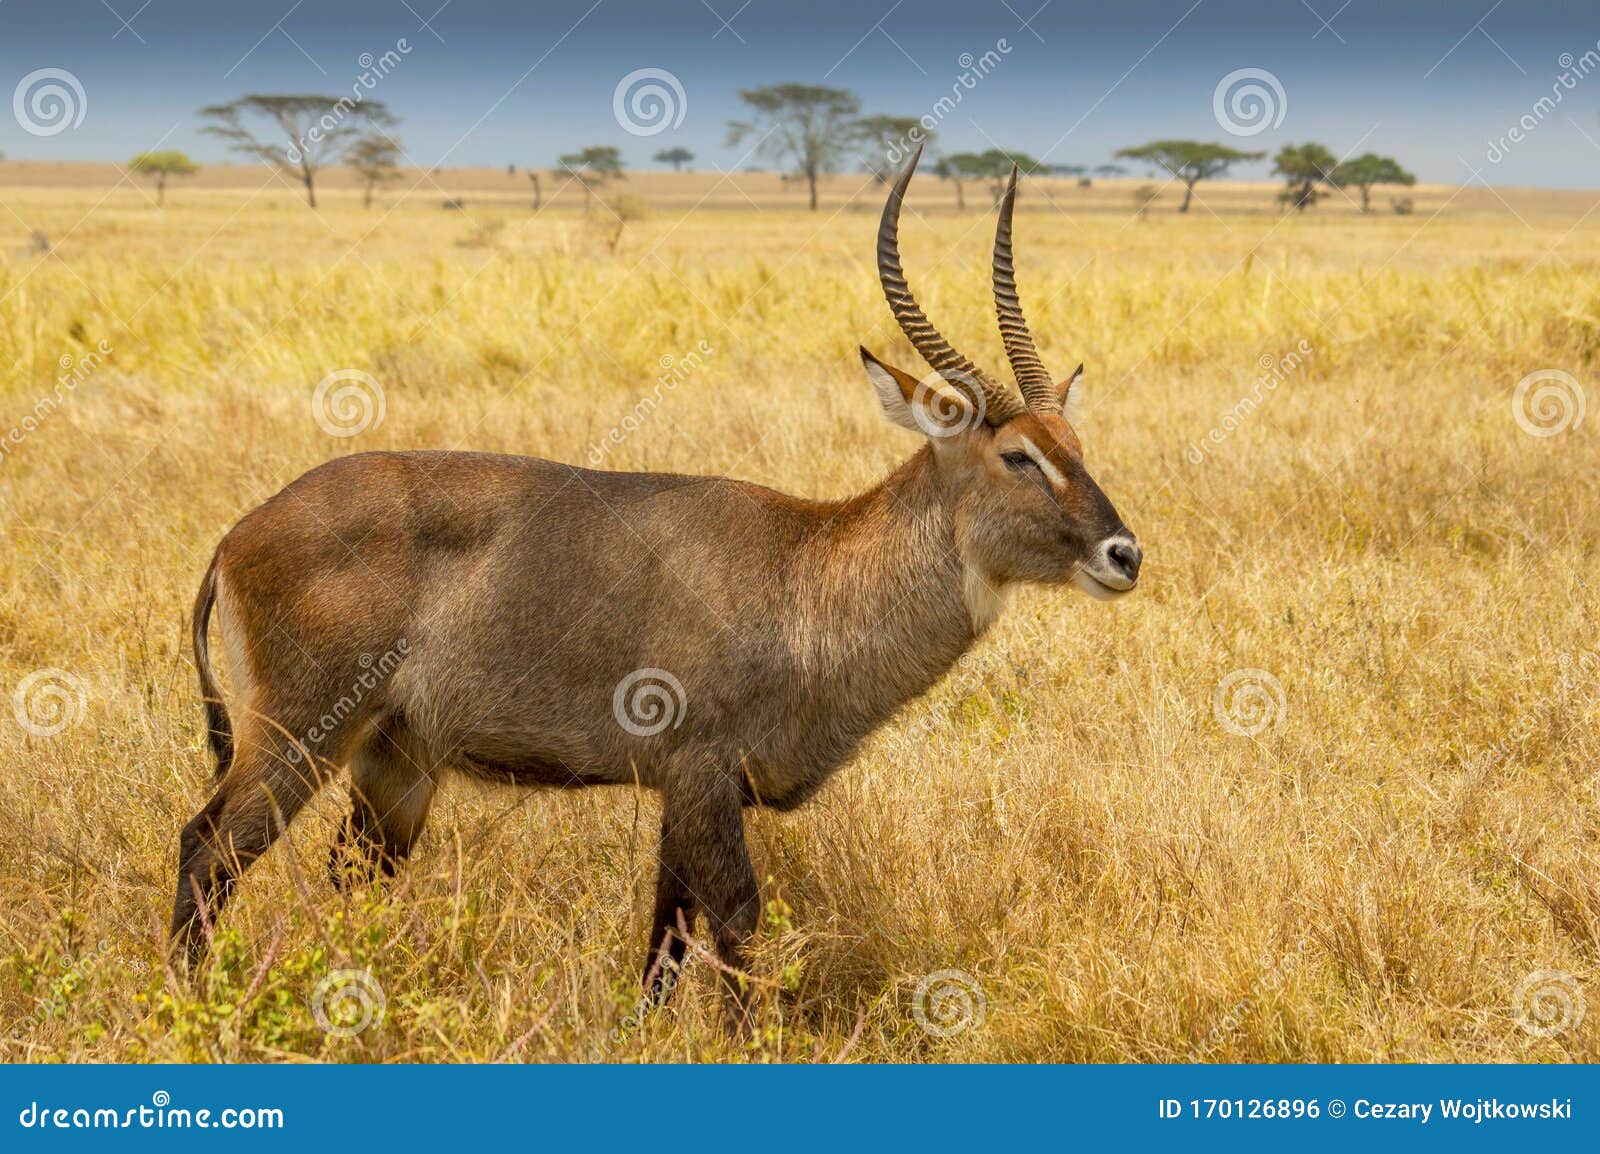 male waterbuck kobus ellipsiprymnus a large antelope found widely in sub saharan africa, tanzania